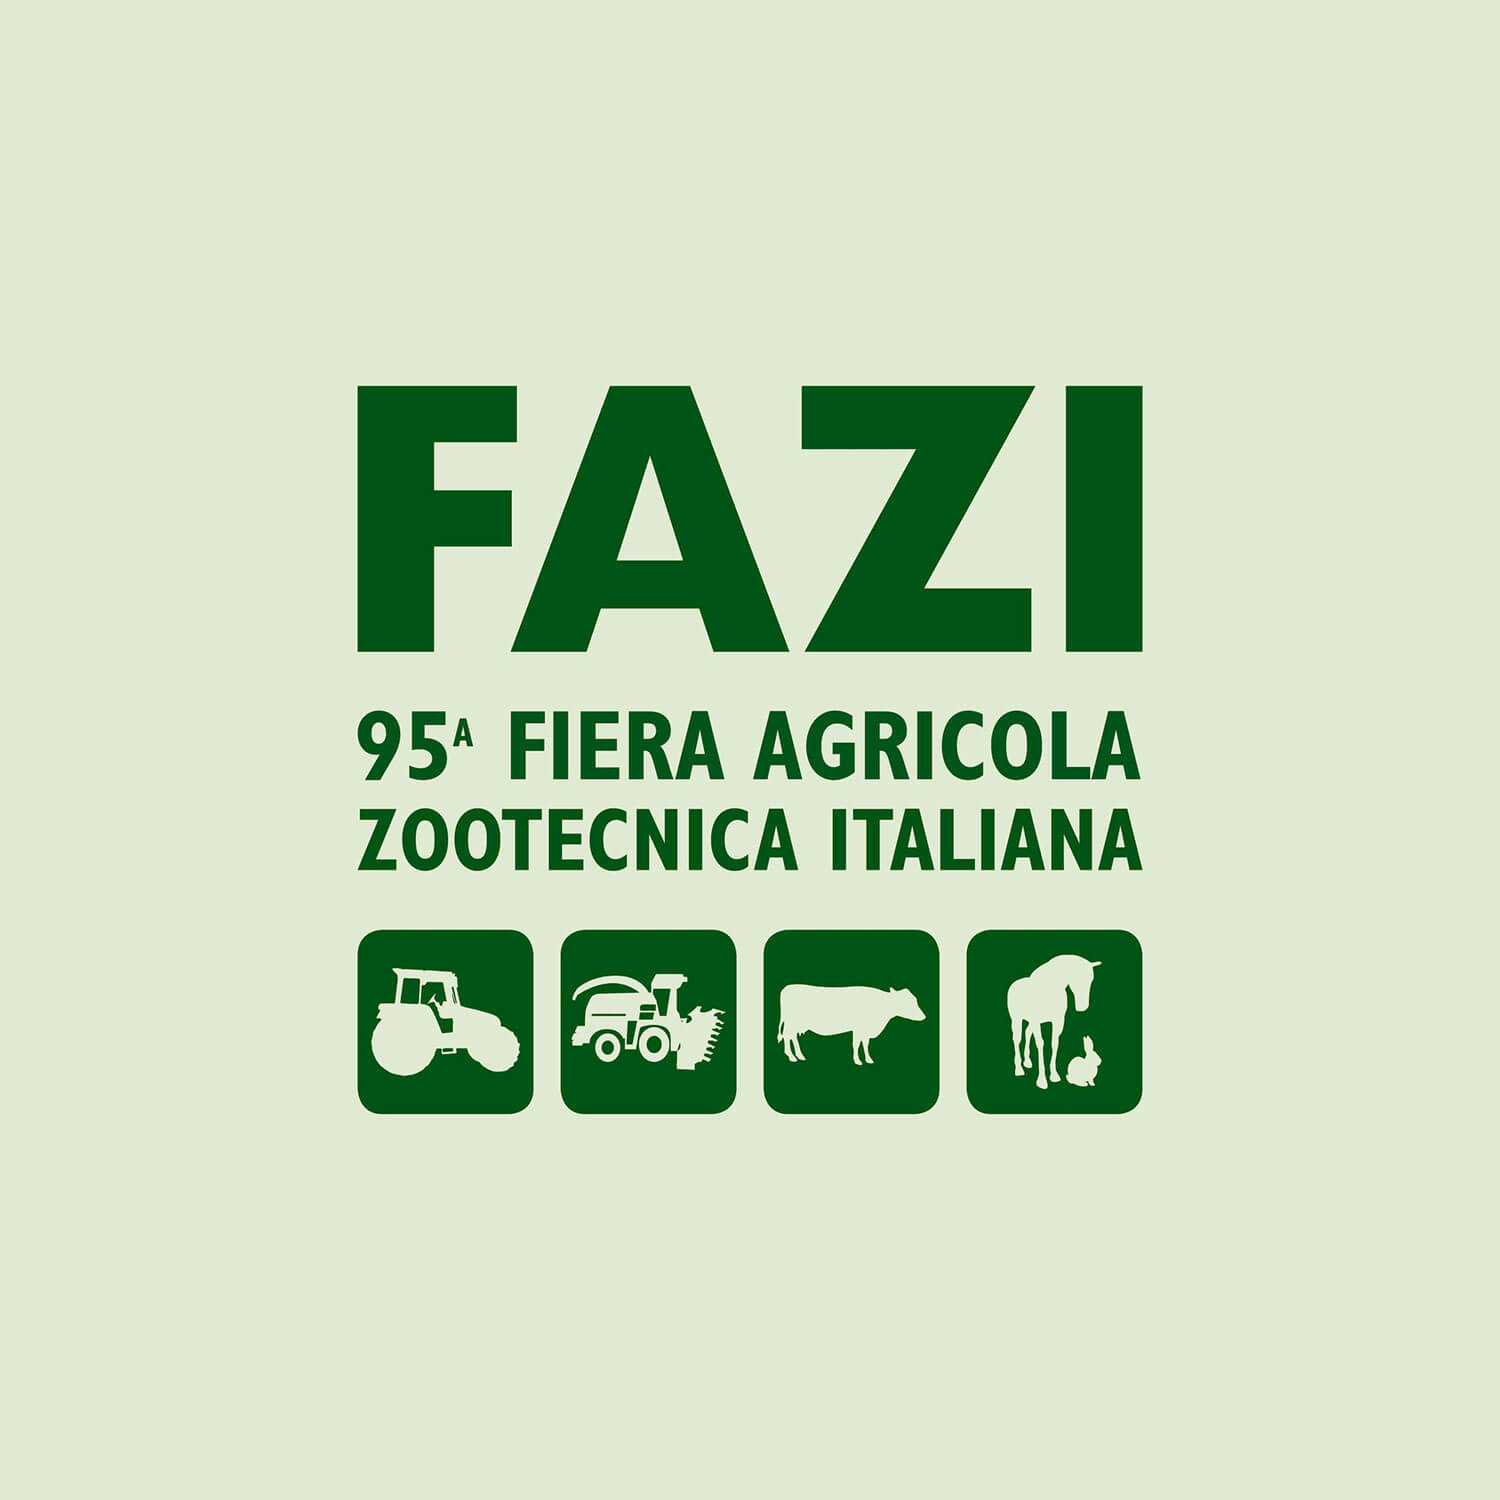 FAZI - 95ª Fiera agricola zootecnica italiana